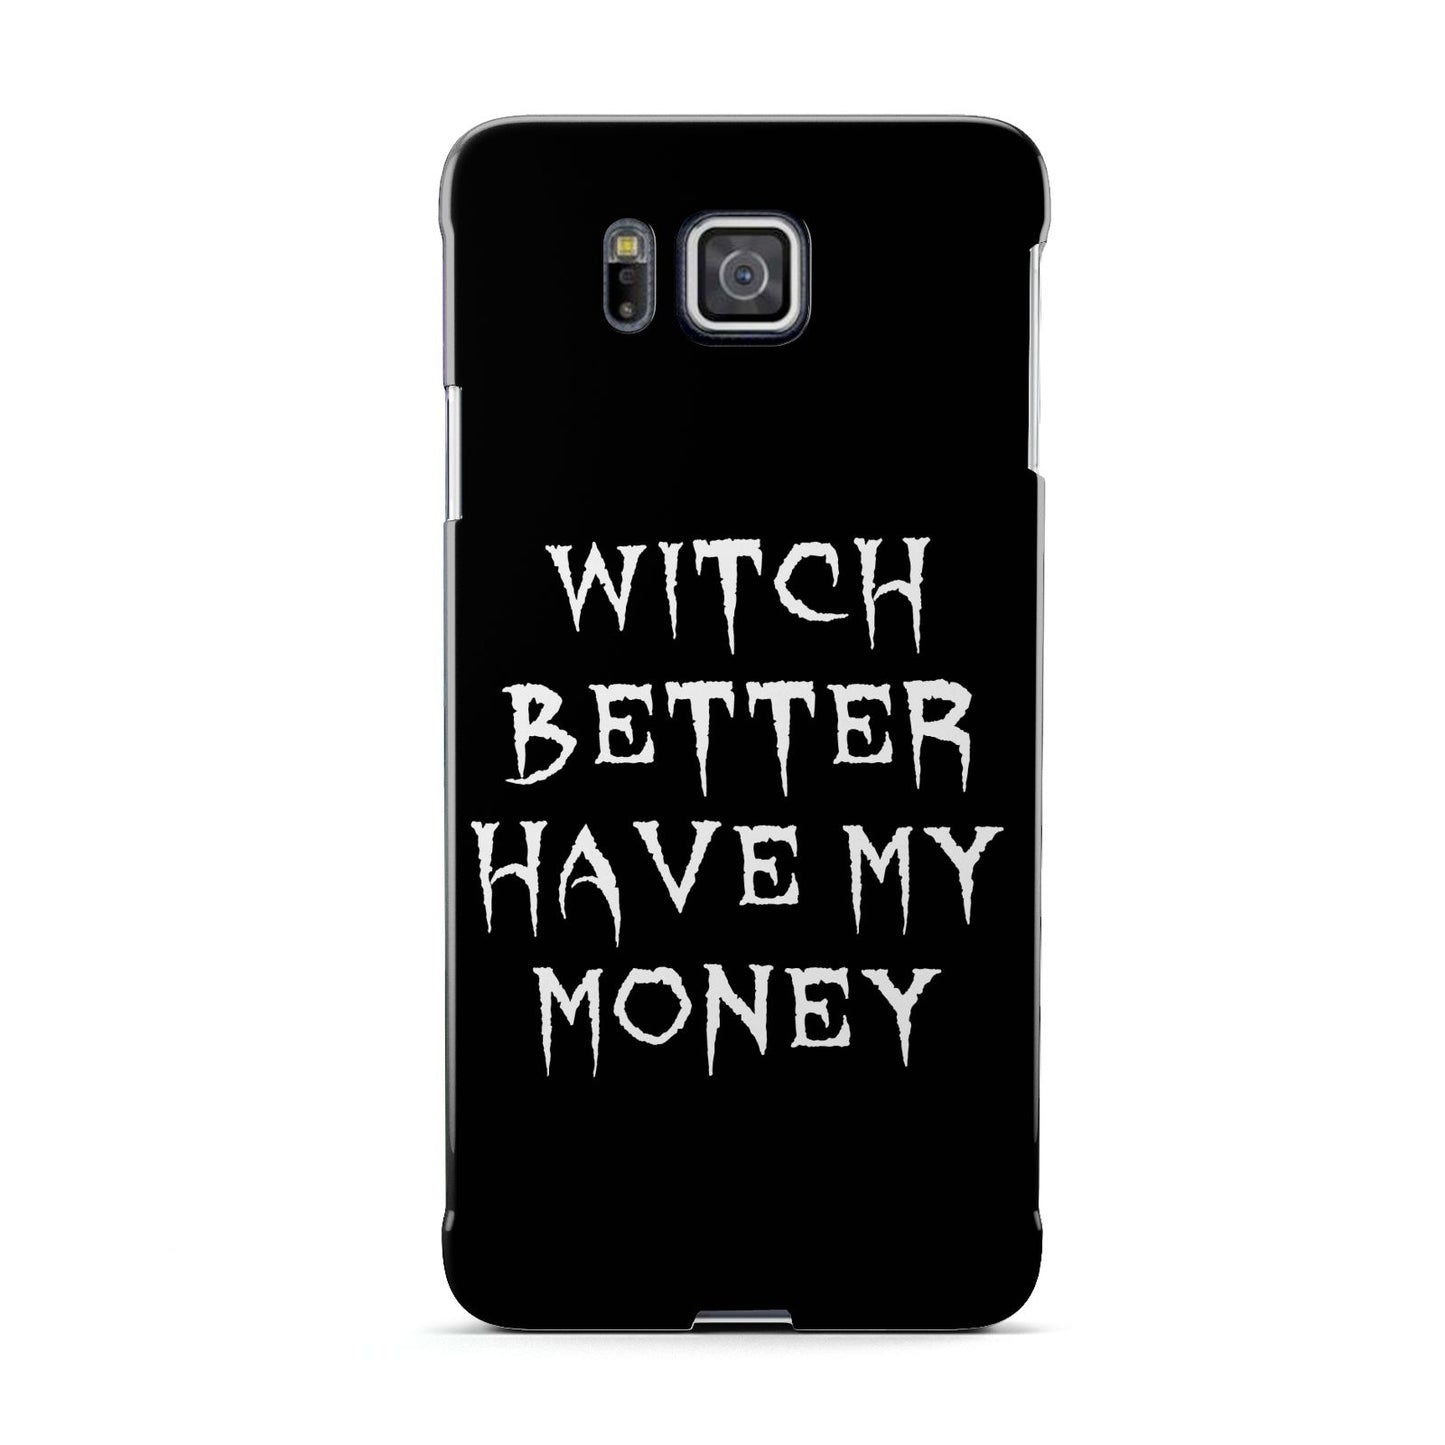 Witch Better Have My Money Samsung Galaxy Alpha Case